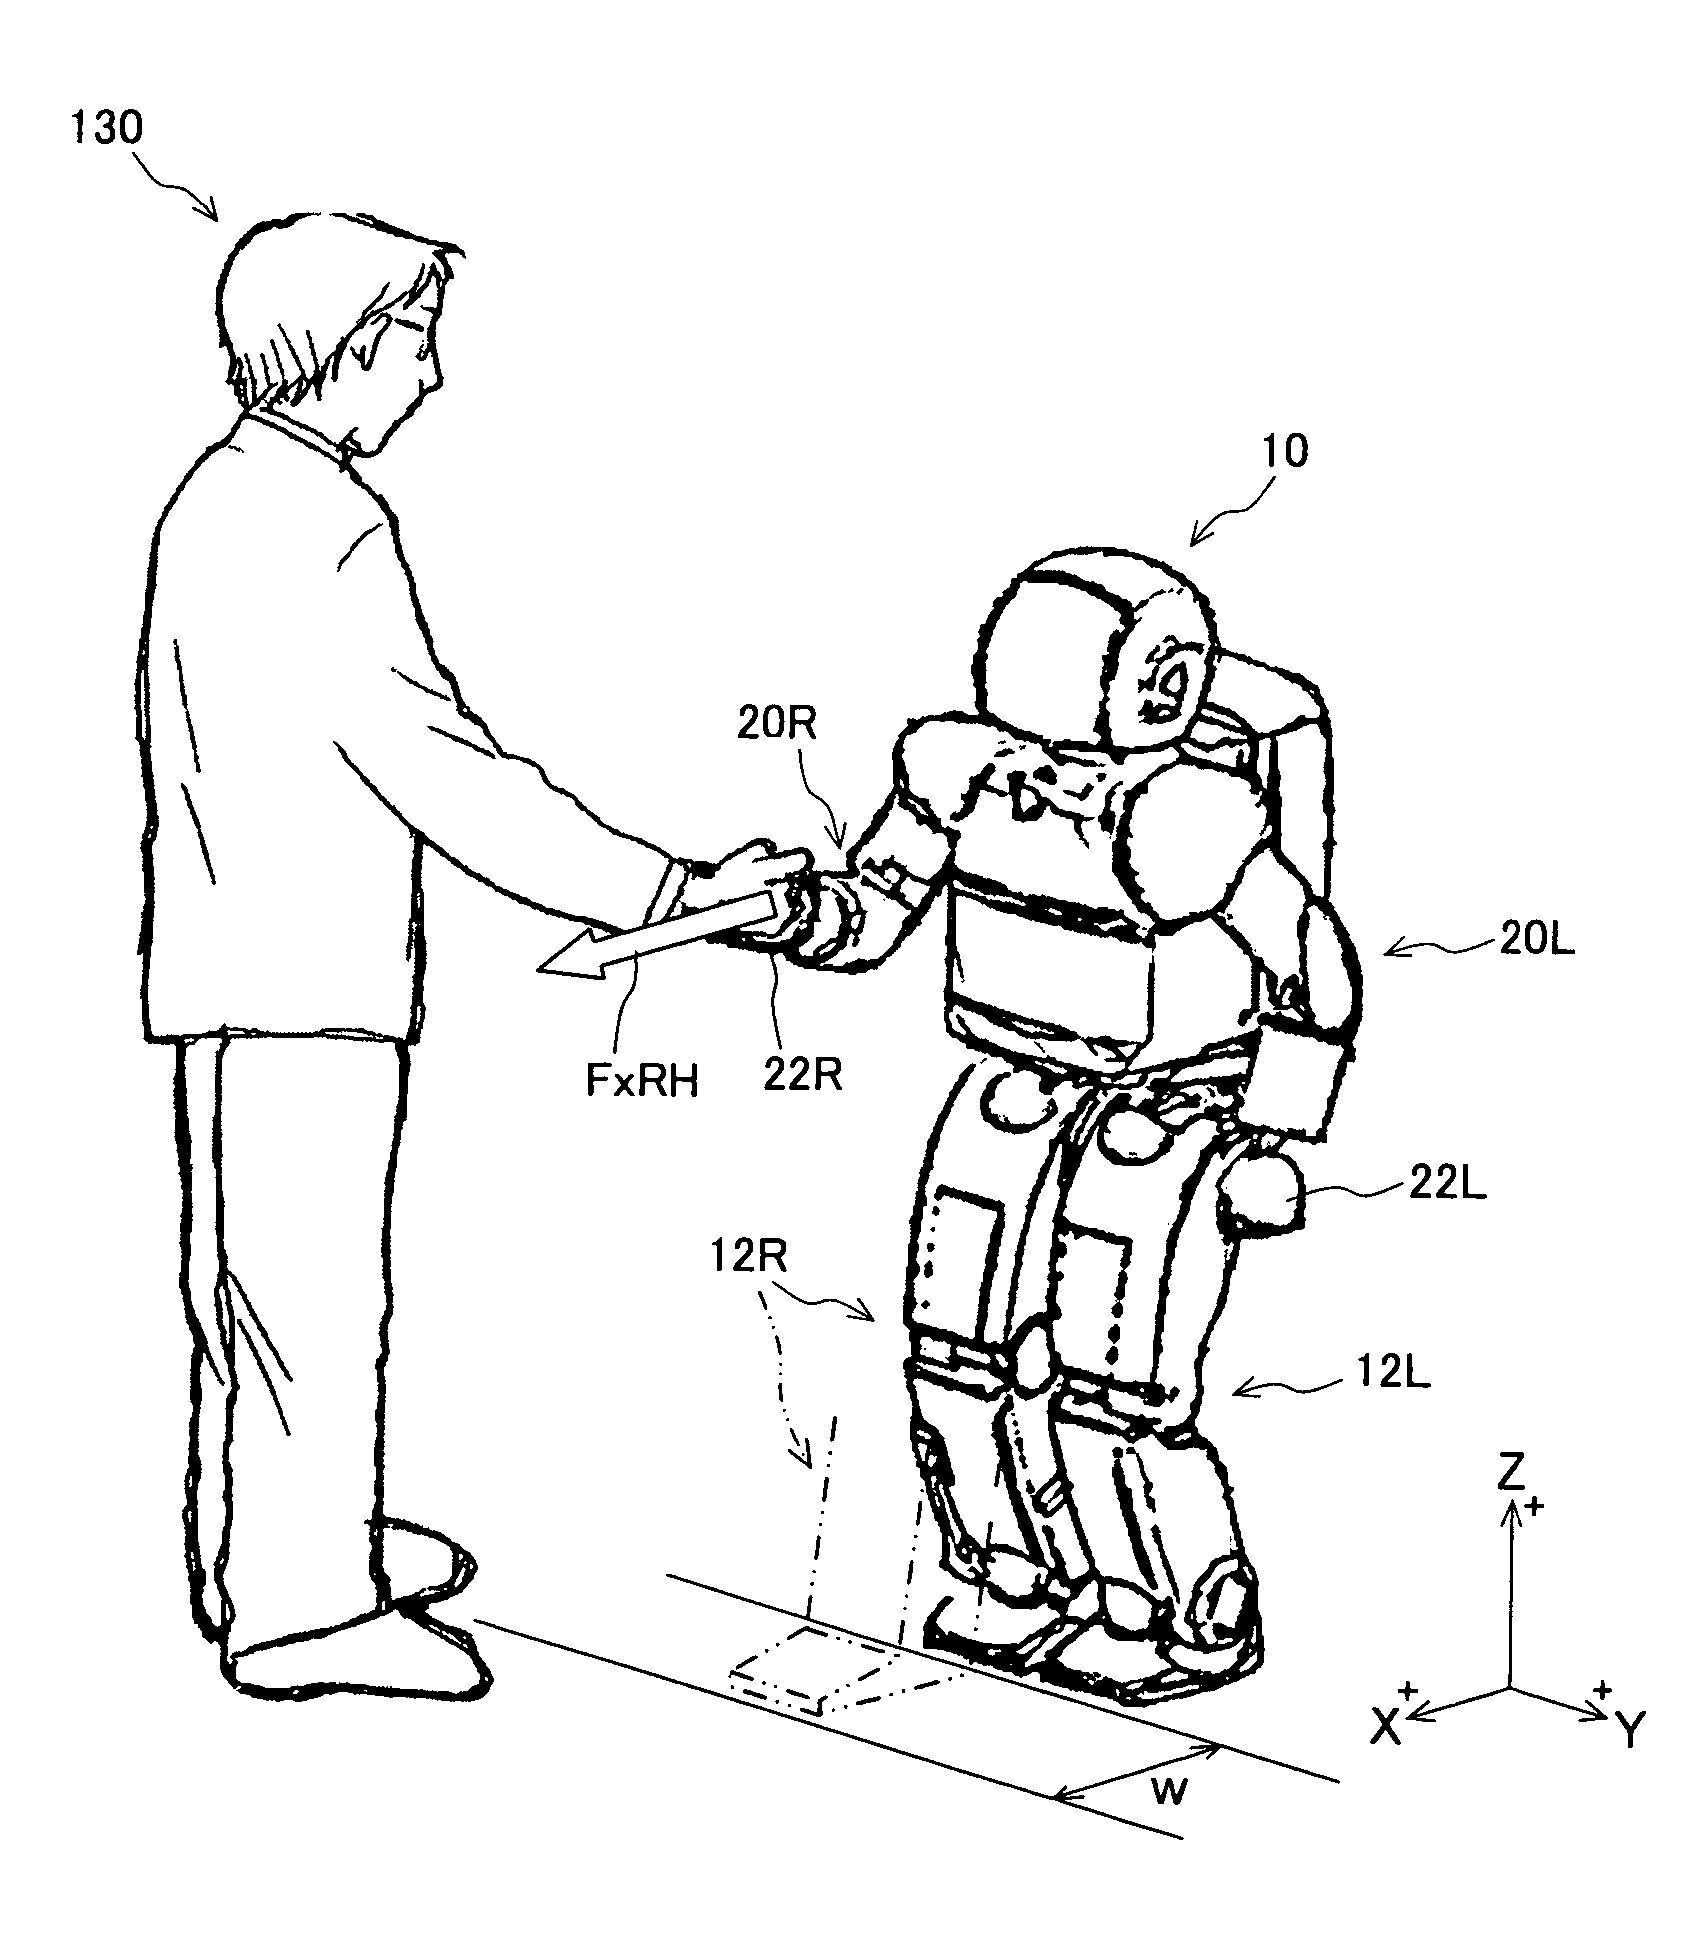 Handshake legged mobile robot control system